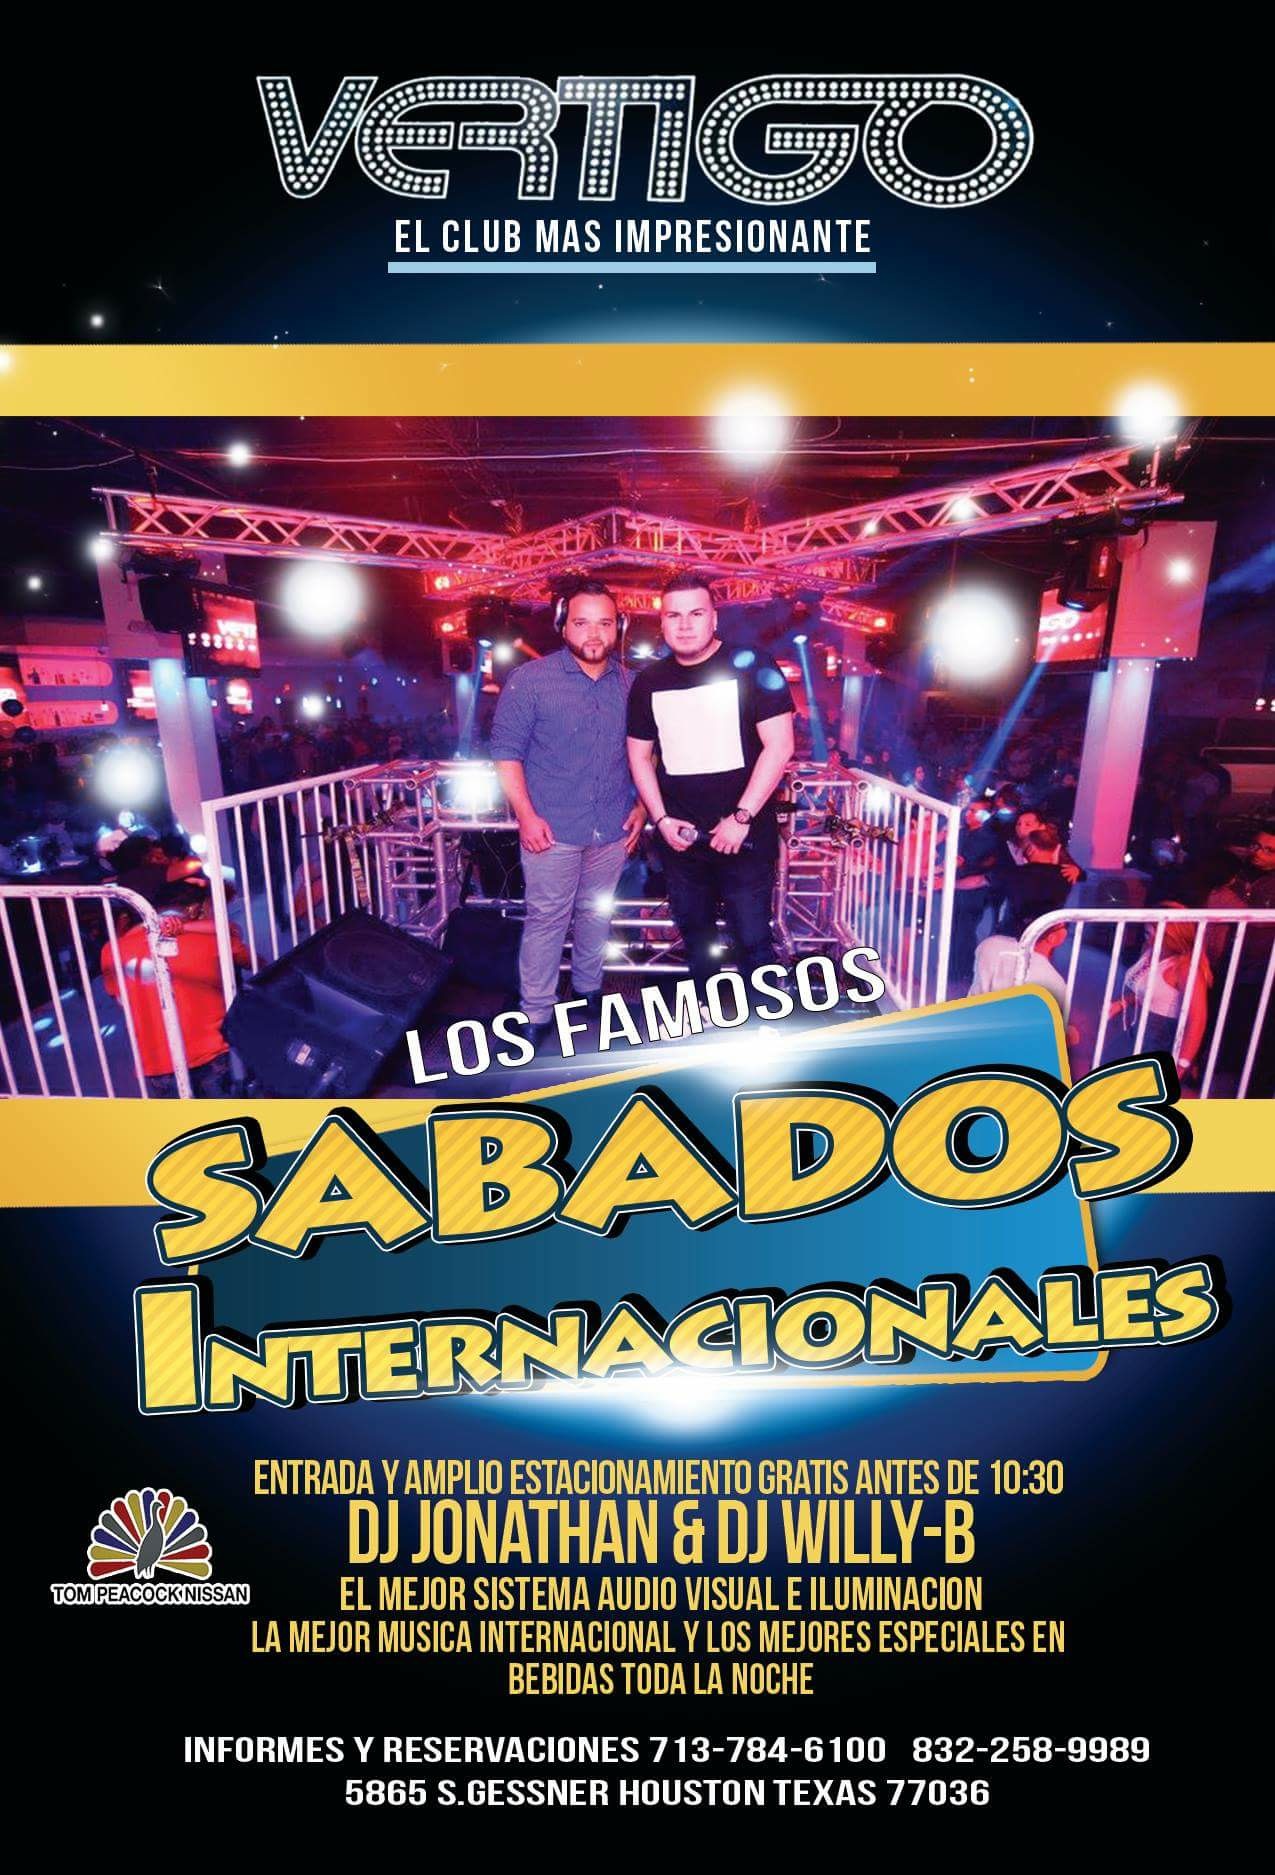 SABADOS INTERNACIONALES Tickets - The Vertigo Club on November 05 2016 in  Houston - Ticketon